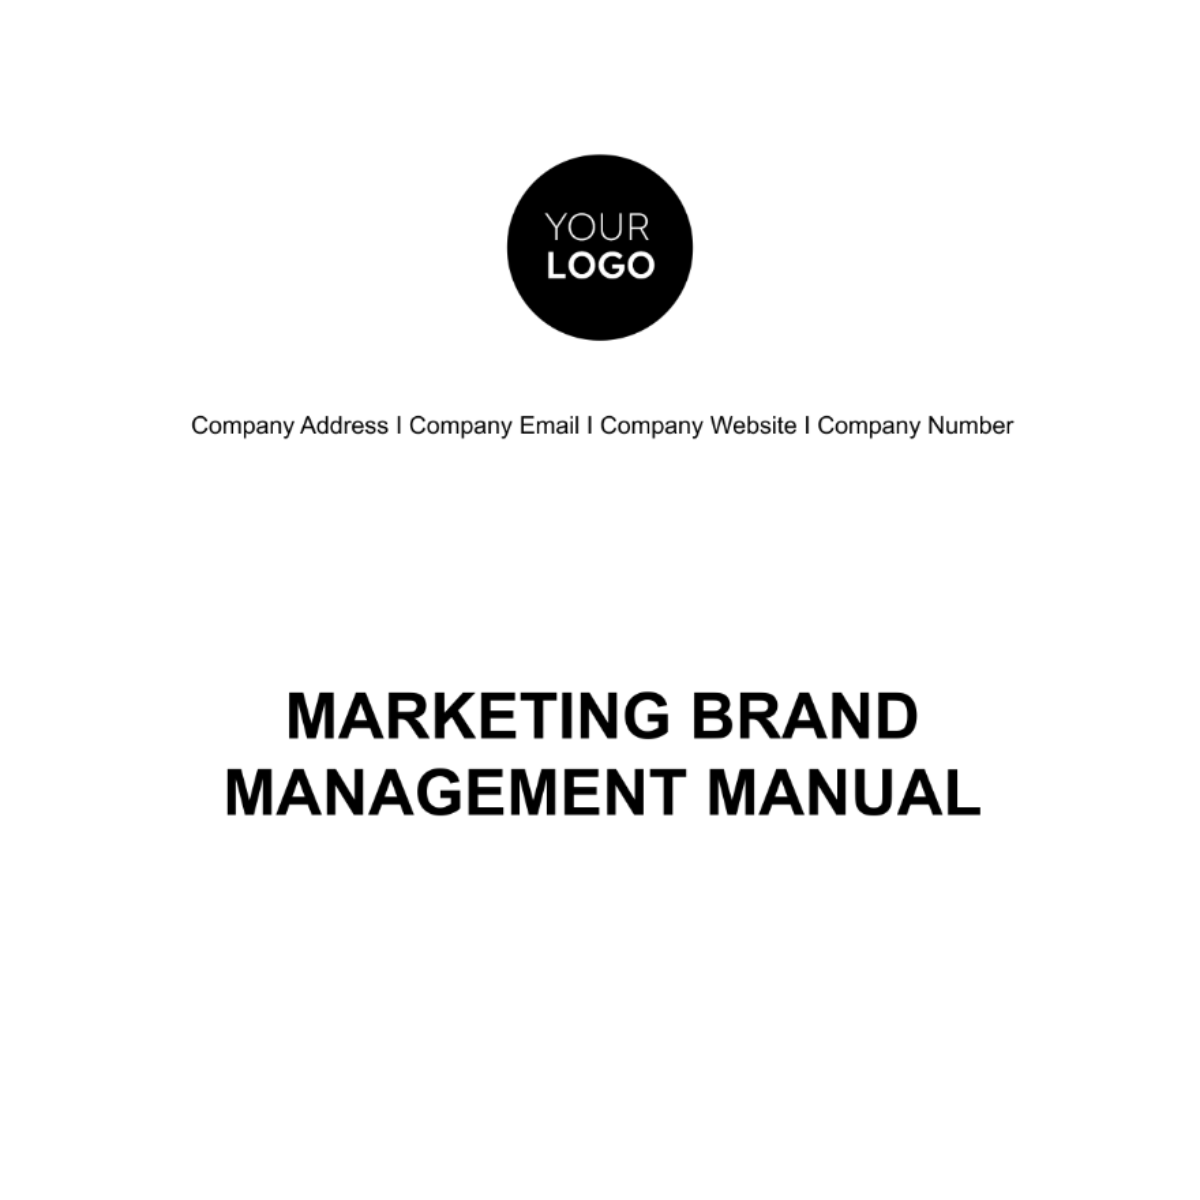 Marketing Brand Management Manual Template